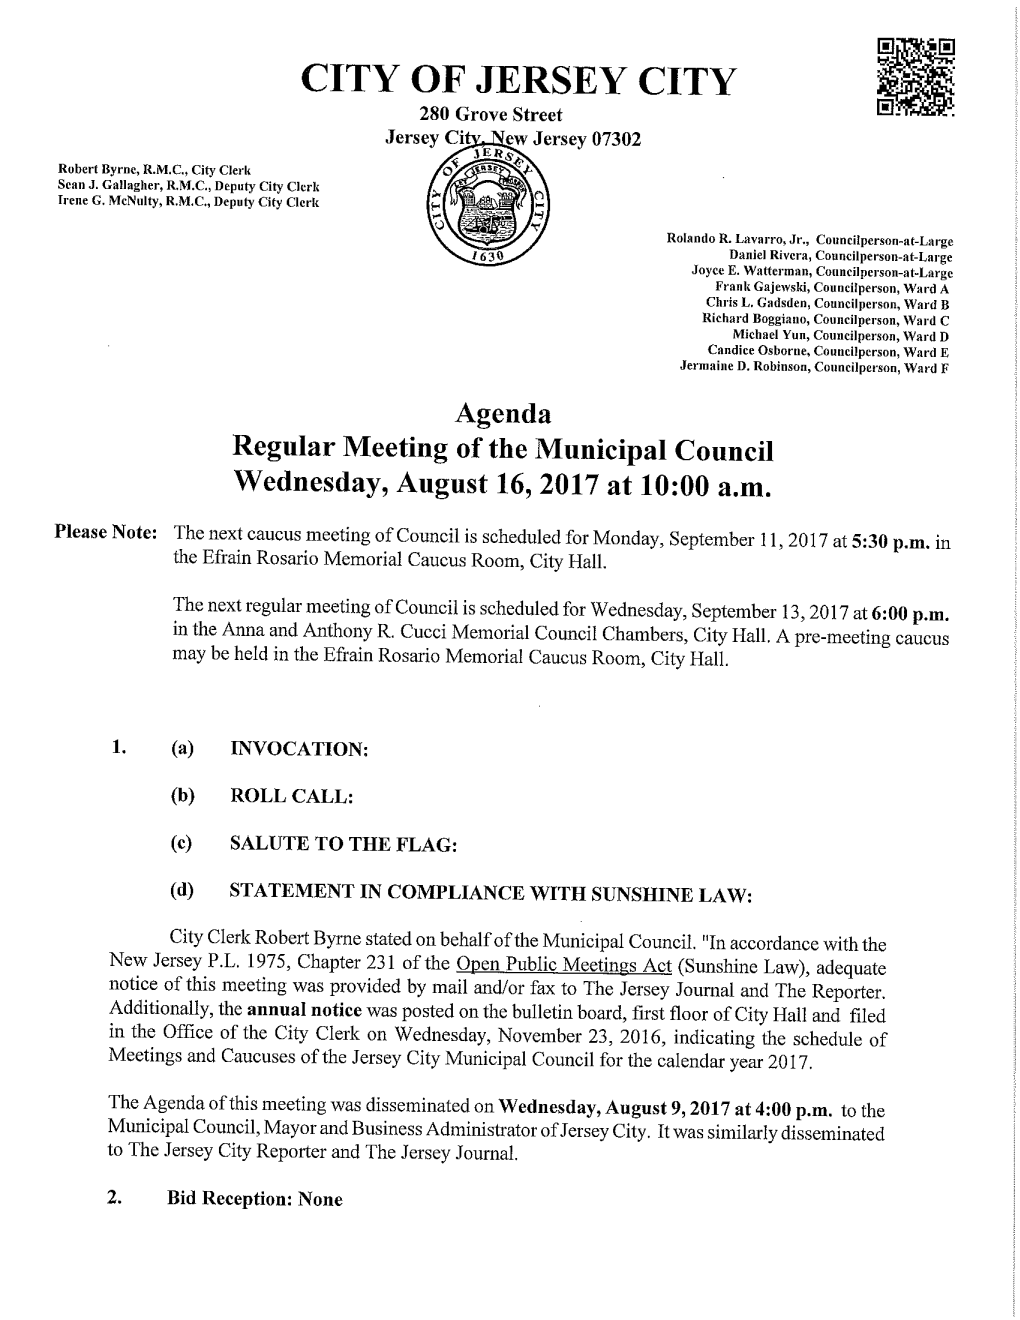 Agenda Regular Meeting of the Municipal Council Wednesday, August 16, 2017 at 10:00 A.M